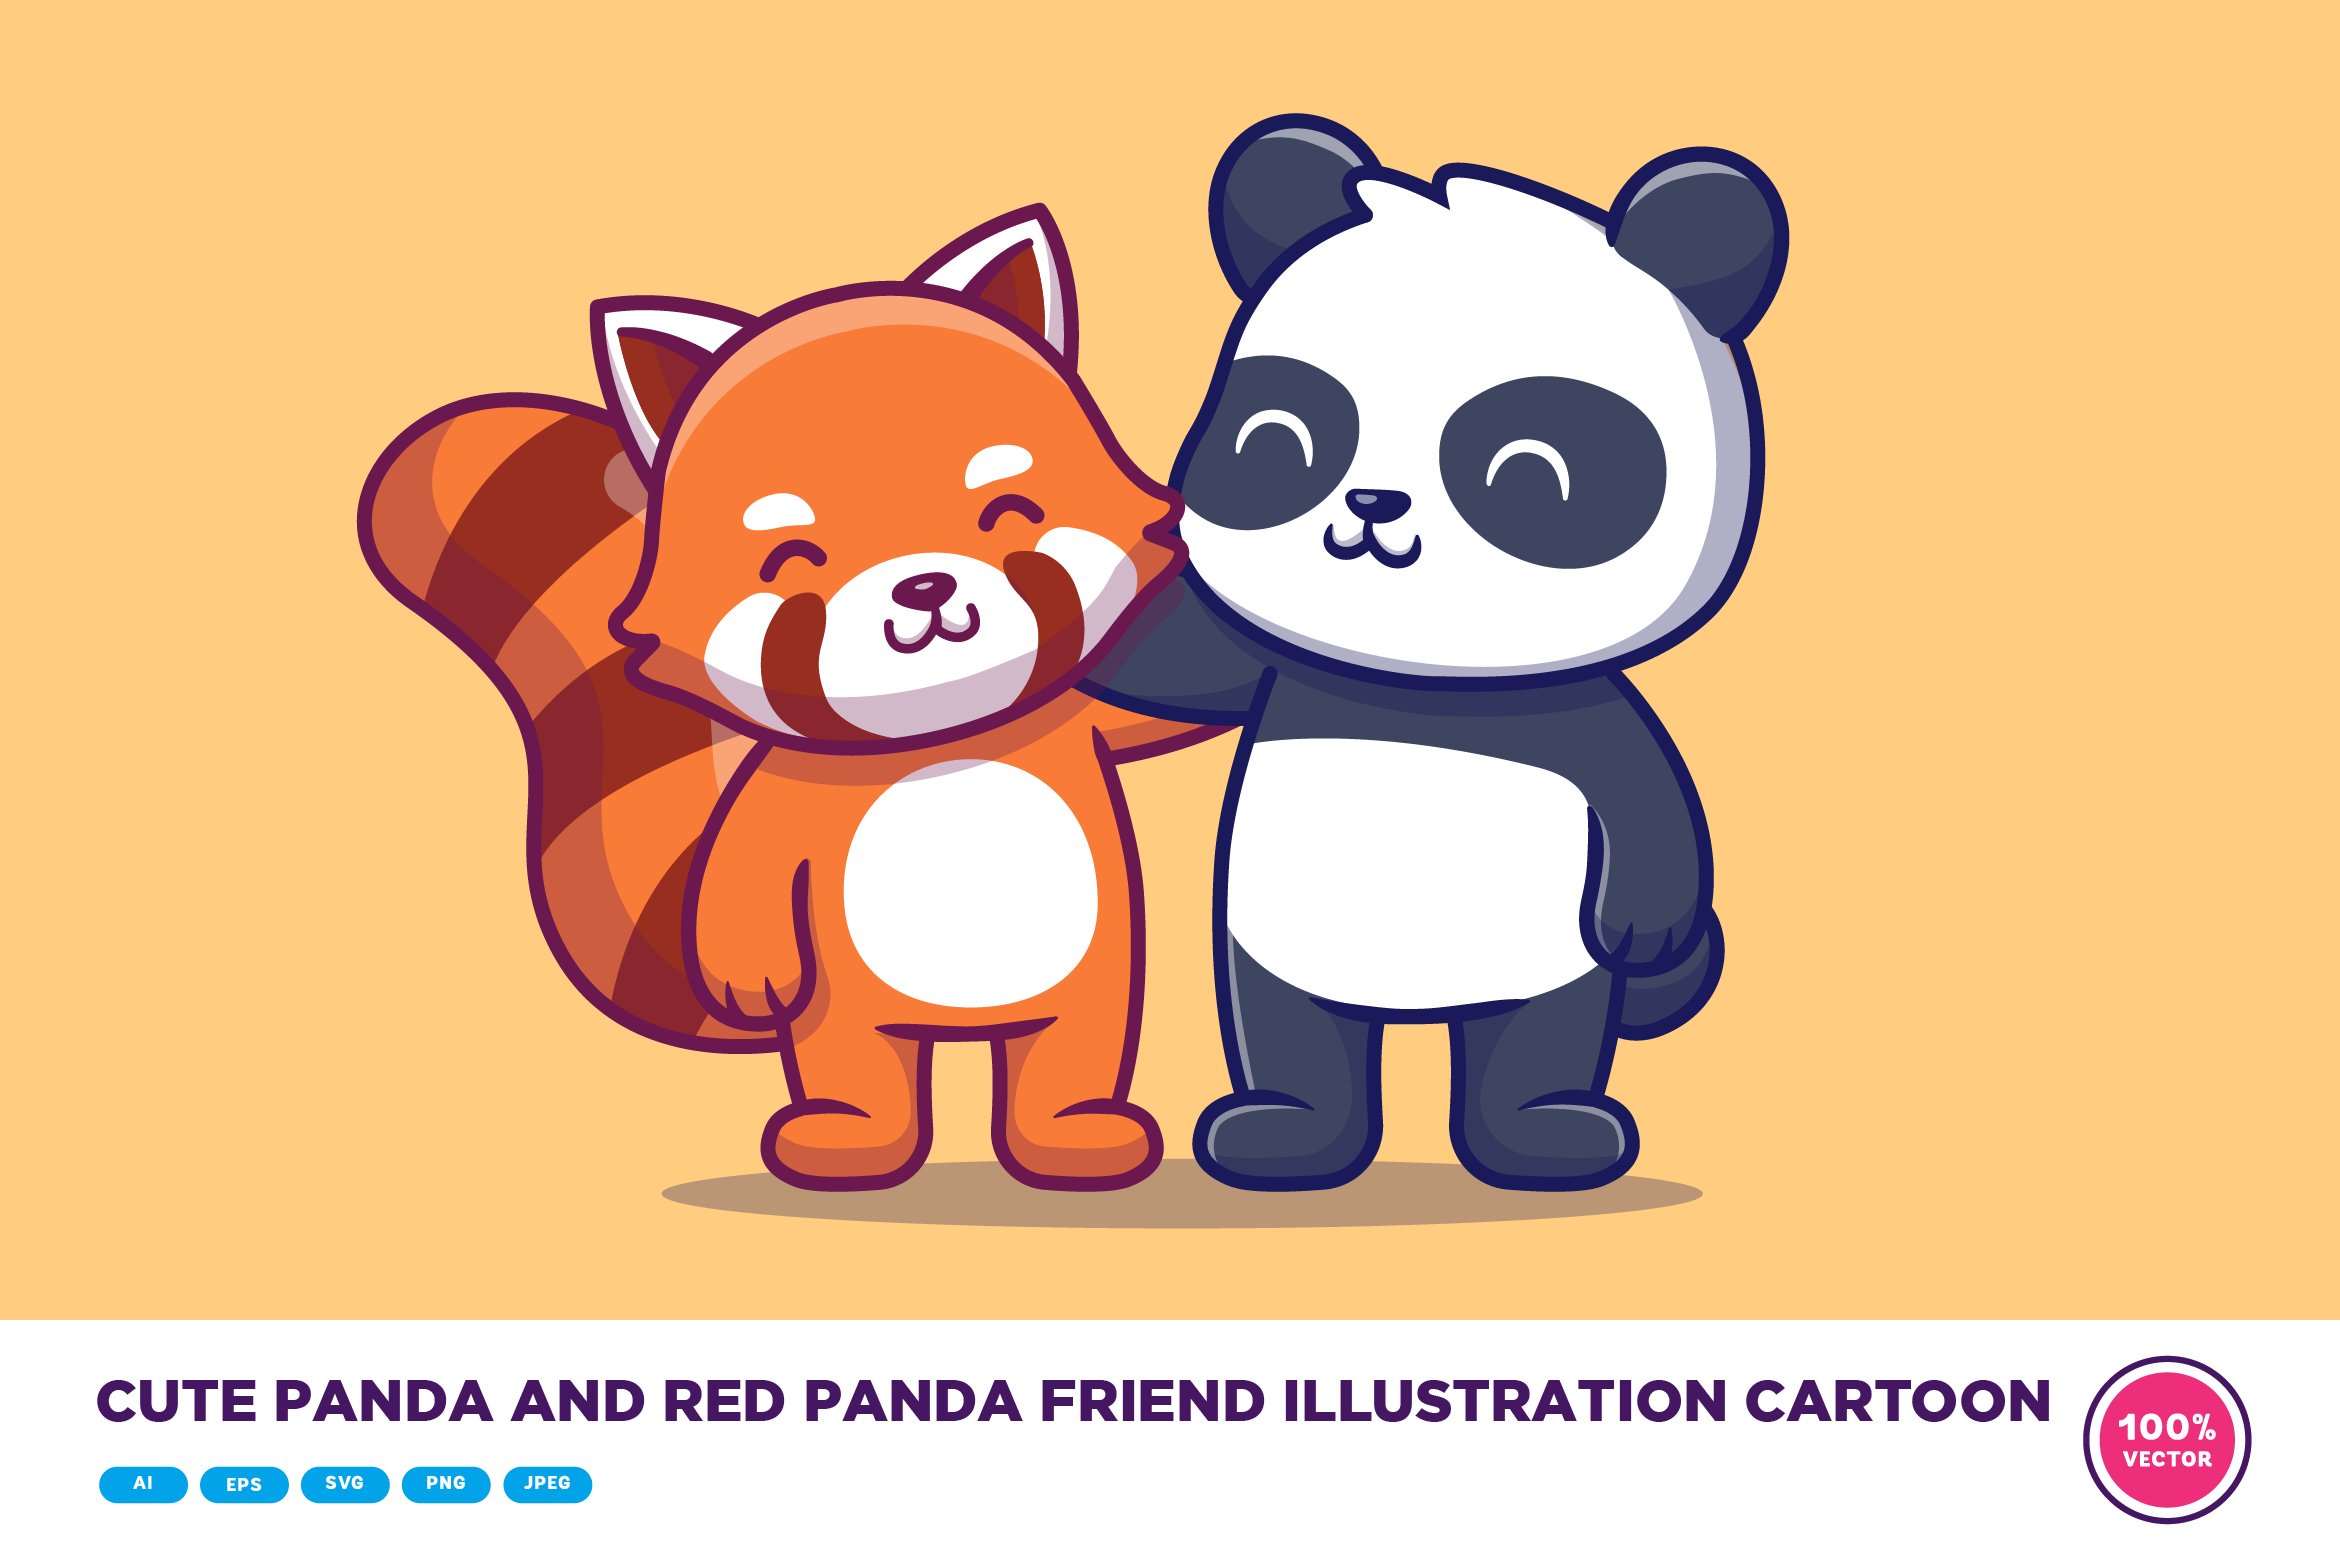 Cute Panda And Red Panda Friend cover image.